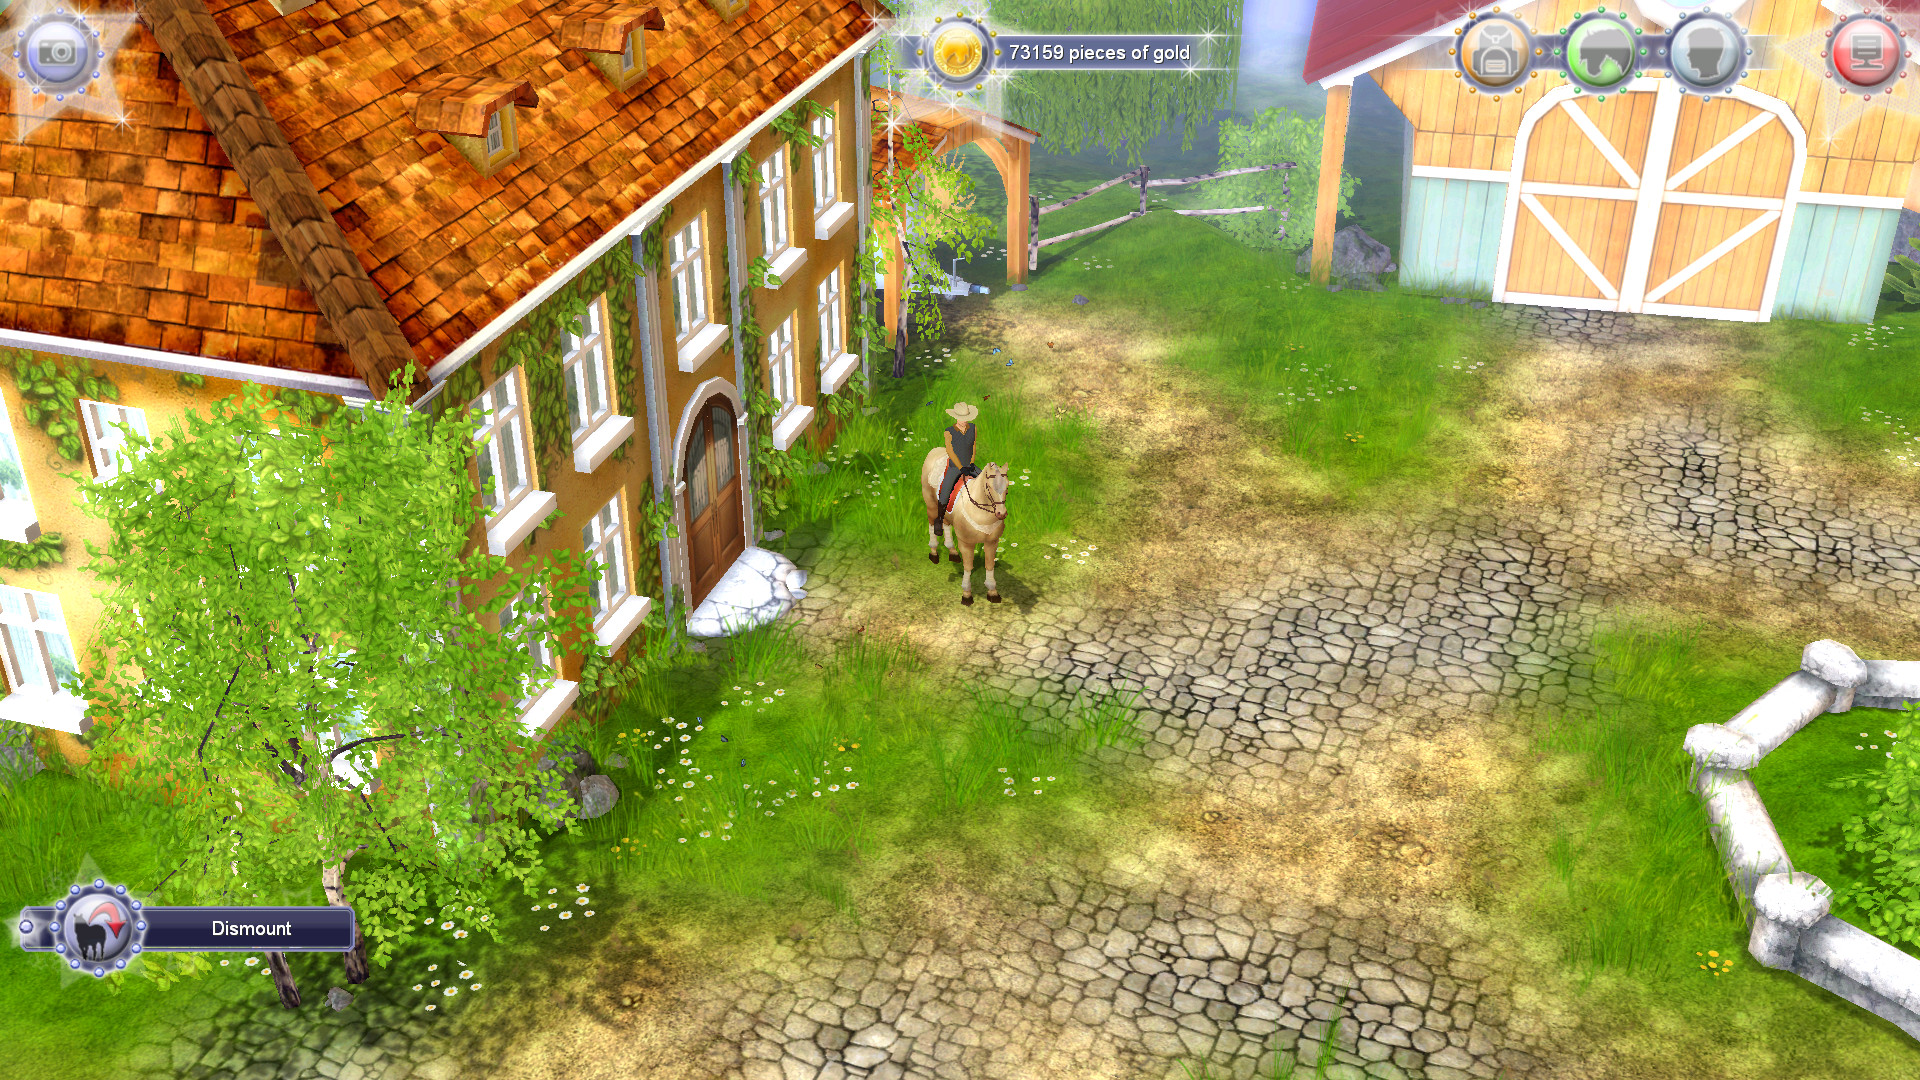 EquiMagic - Galashow of Horses screenshot